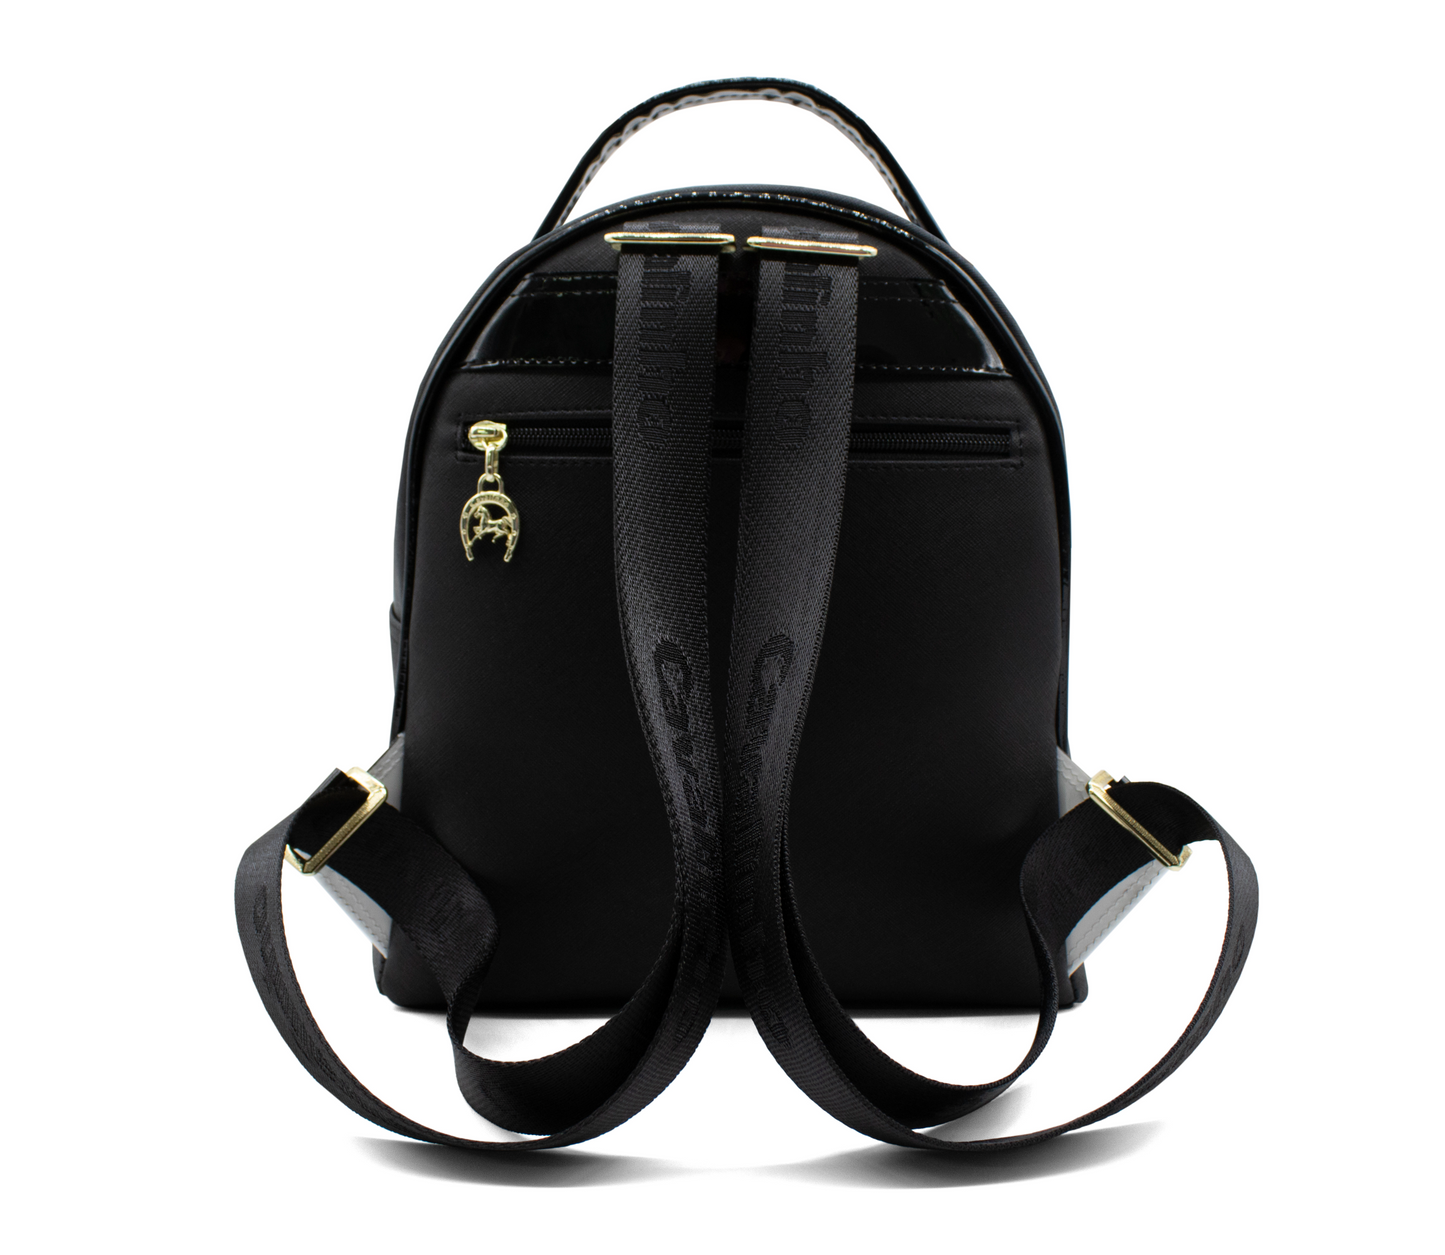 Cavalinho Noble Backpack - Black and White - 18180207.33_3